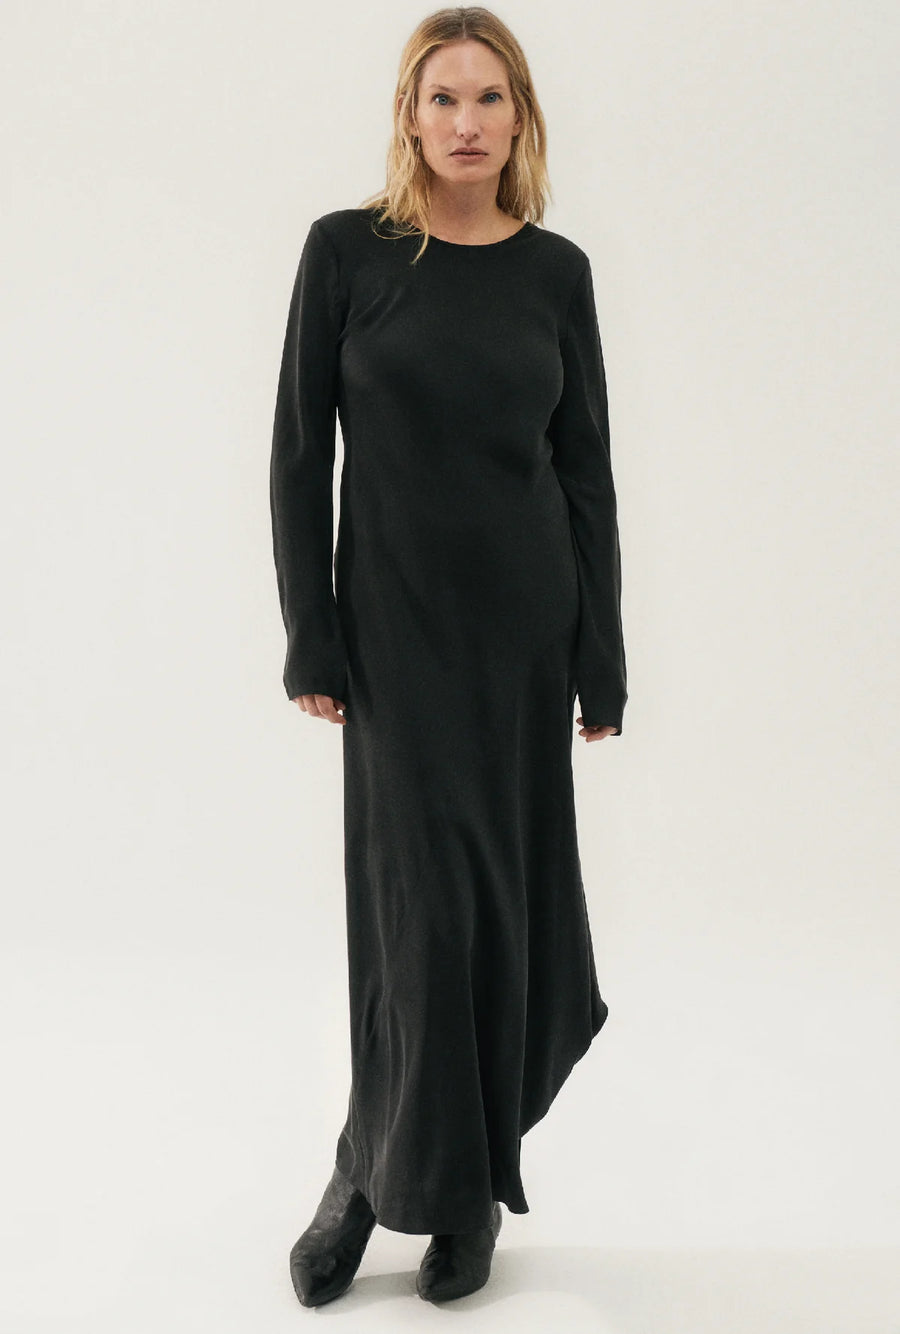 Silk Laundry Full Sleeve Bias Cut Dress Black